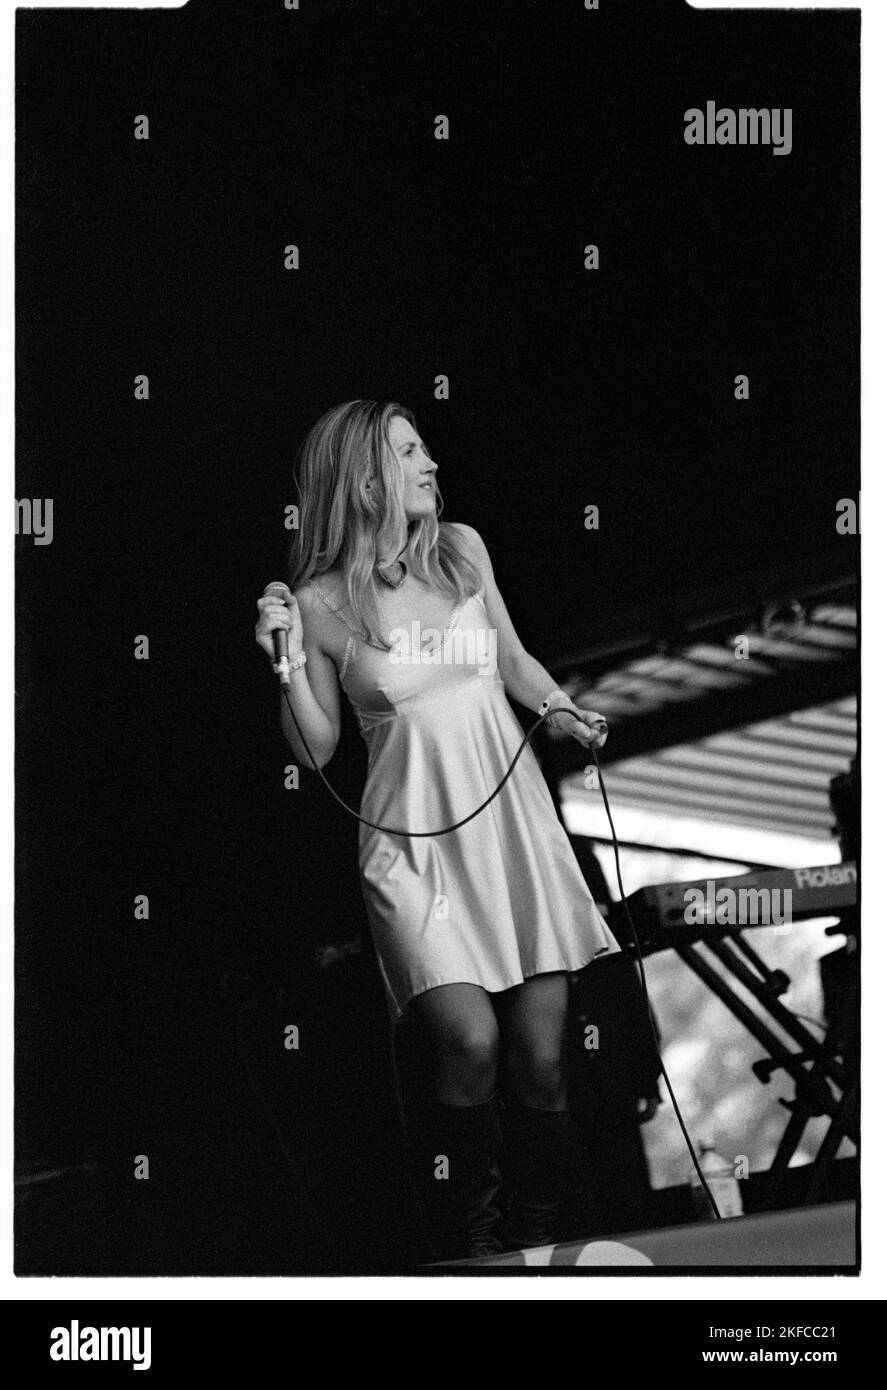 Singer Sarah Cracknell of Saint Etienne on the Pyramid Stage at Glastonbury Festival, Pilton, England, June 26 1994. Photograph: ROB WATKINS Stock Photo